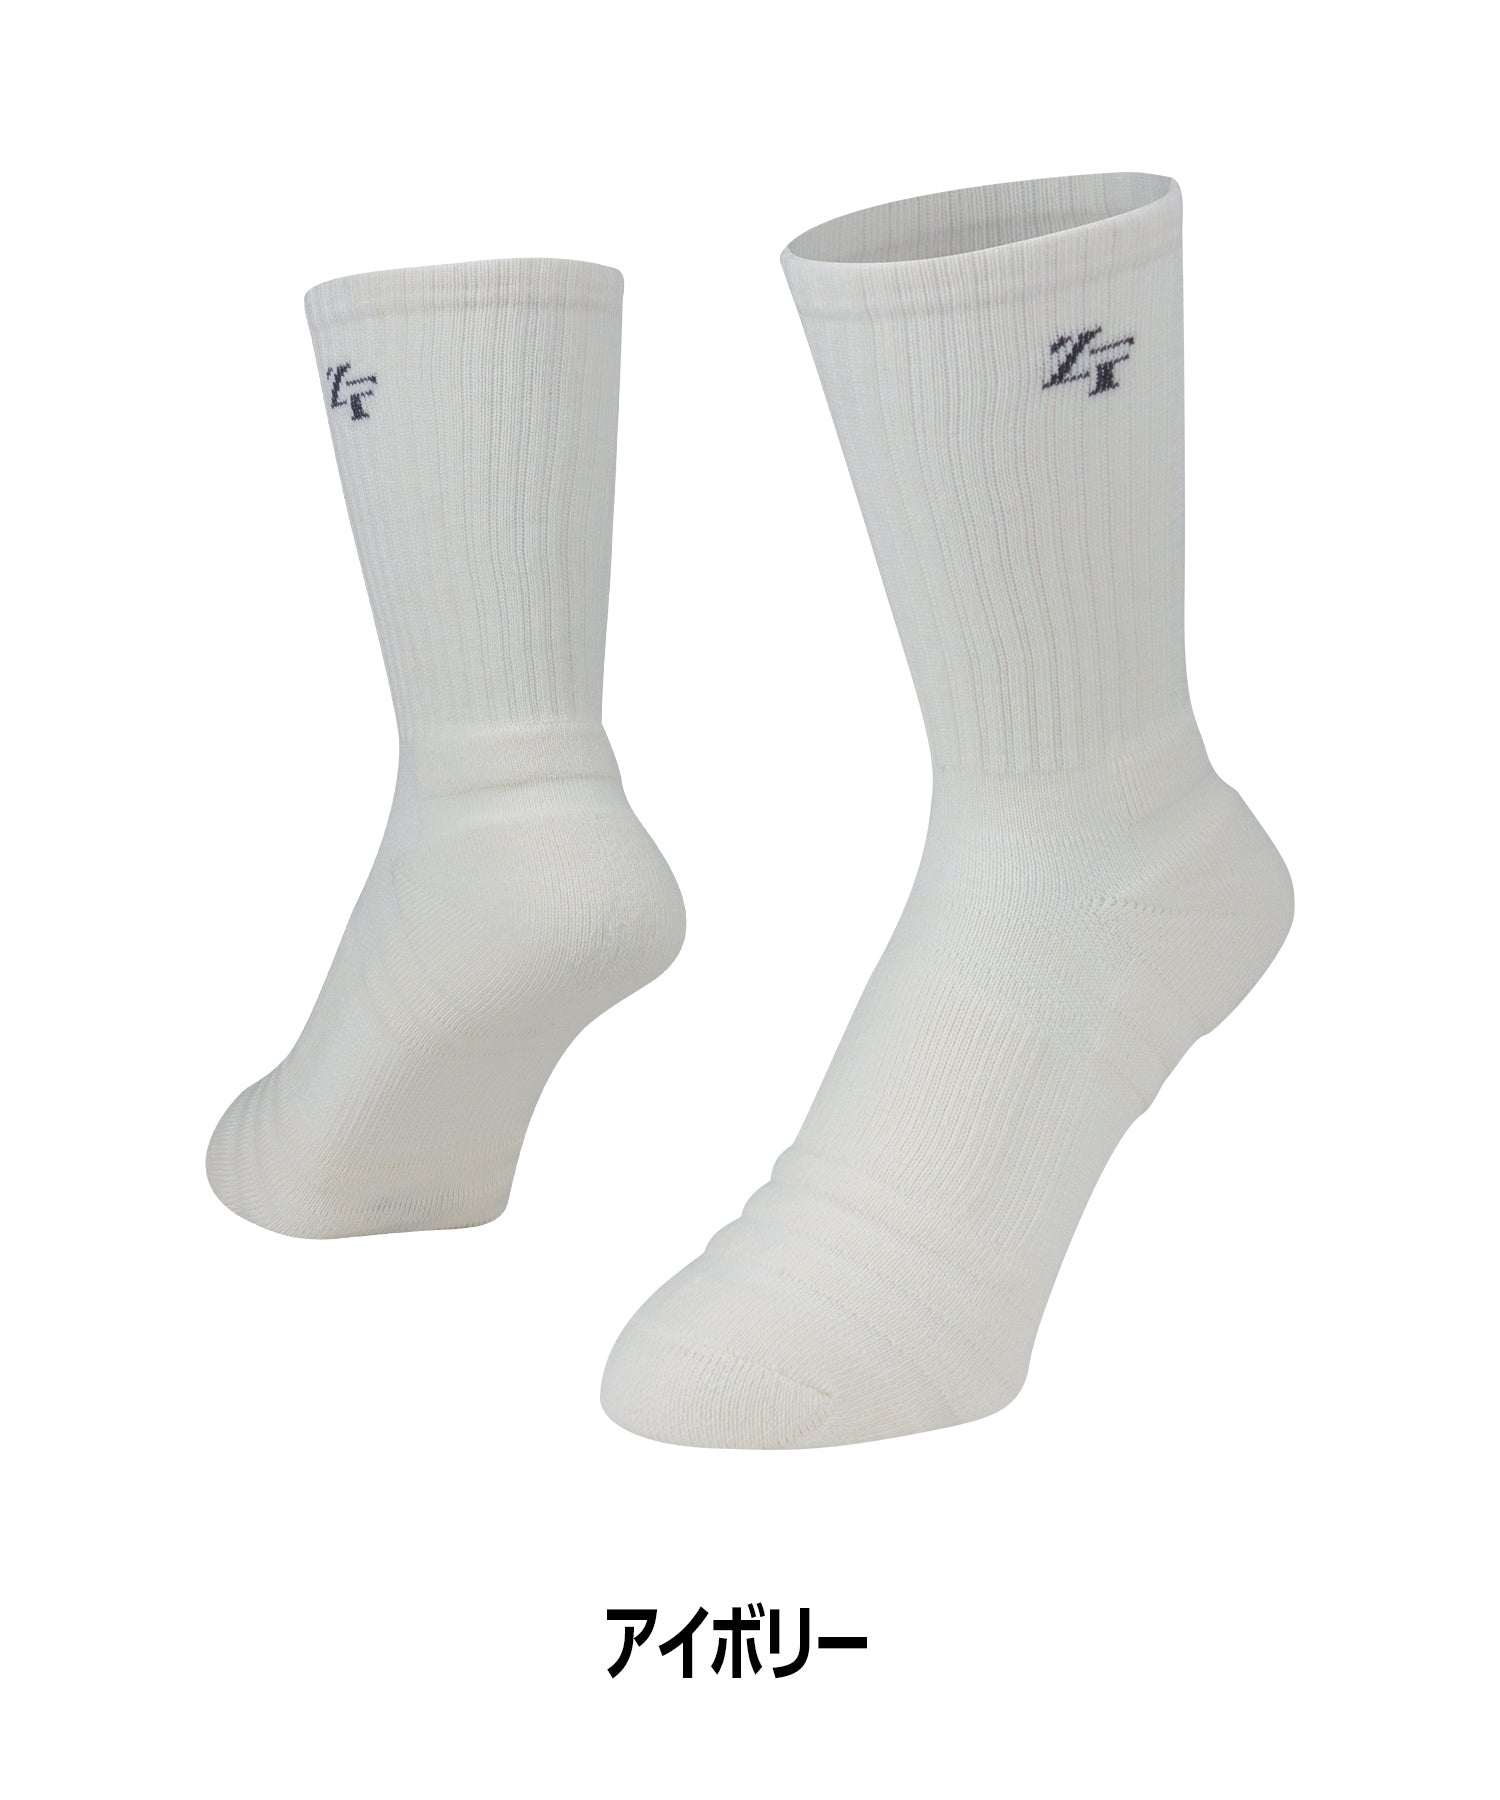 Antibacterial socks, medium, set of 2